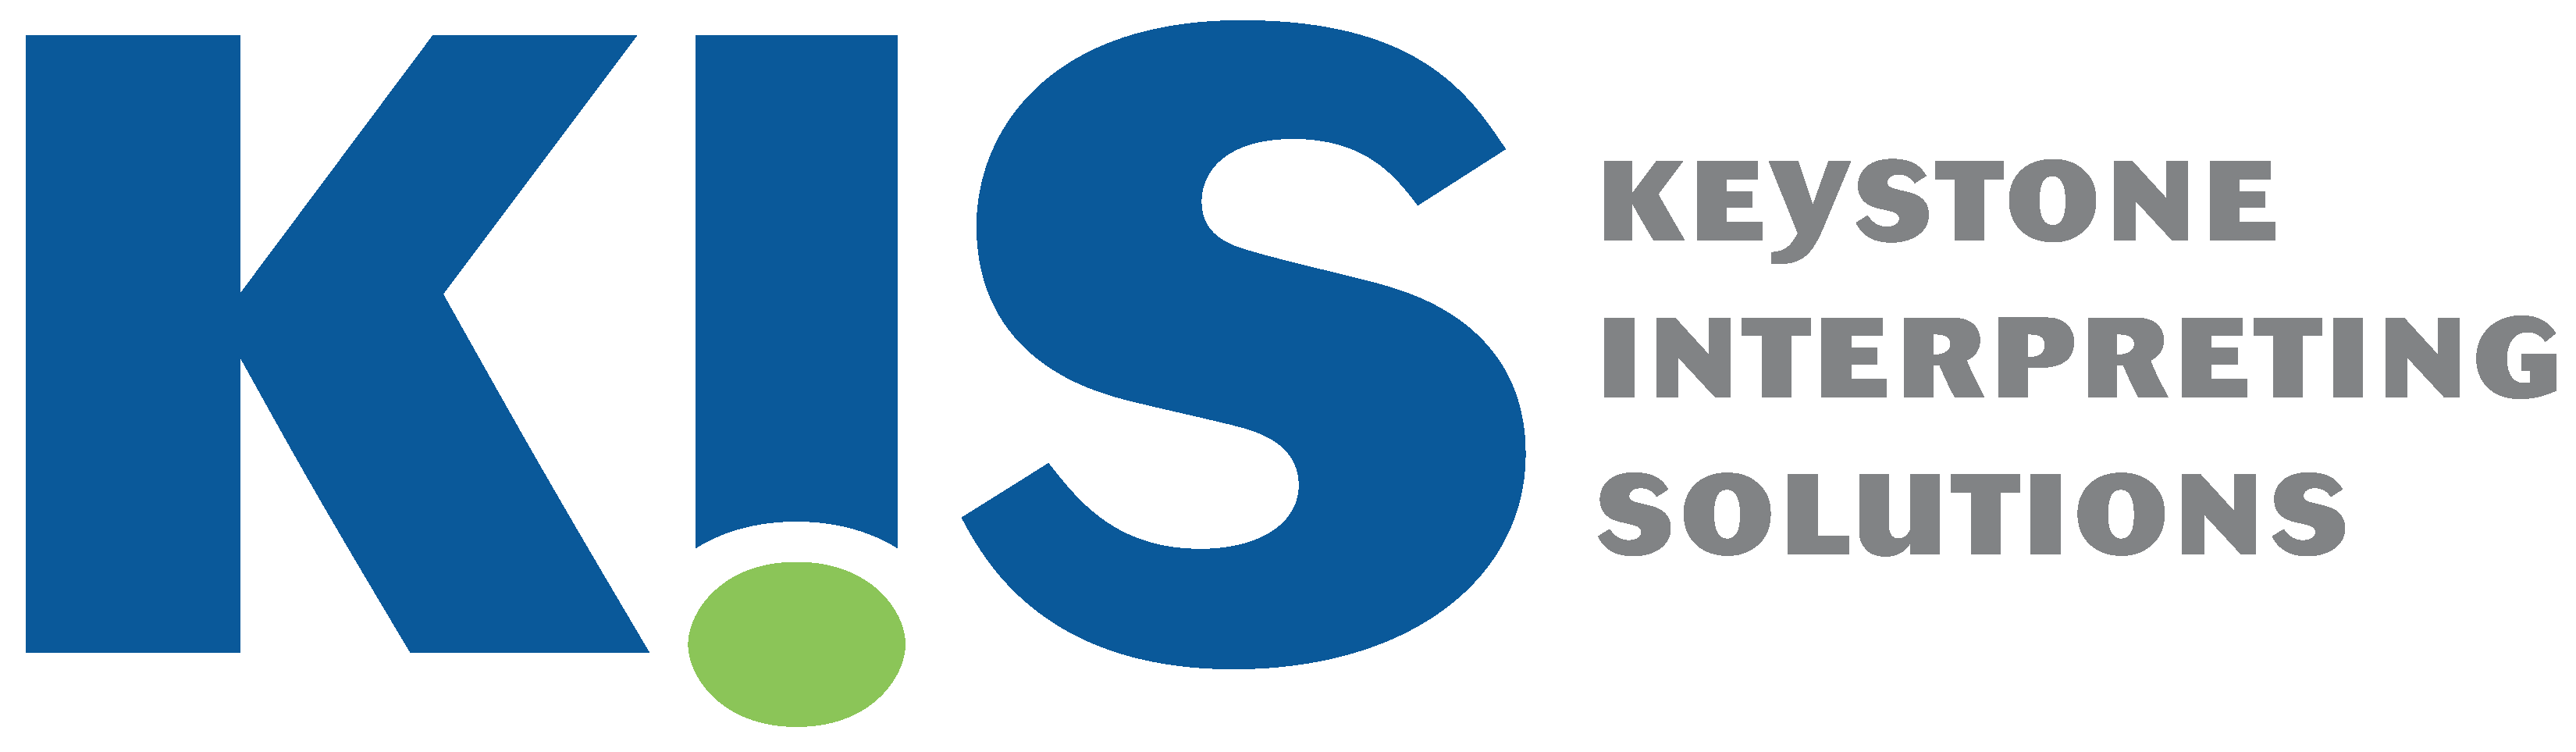 Interpreter Logo - Home. Keystone Interpreting Solutions